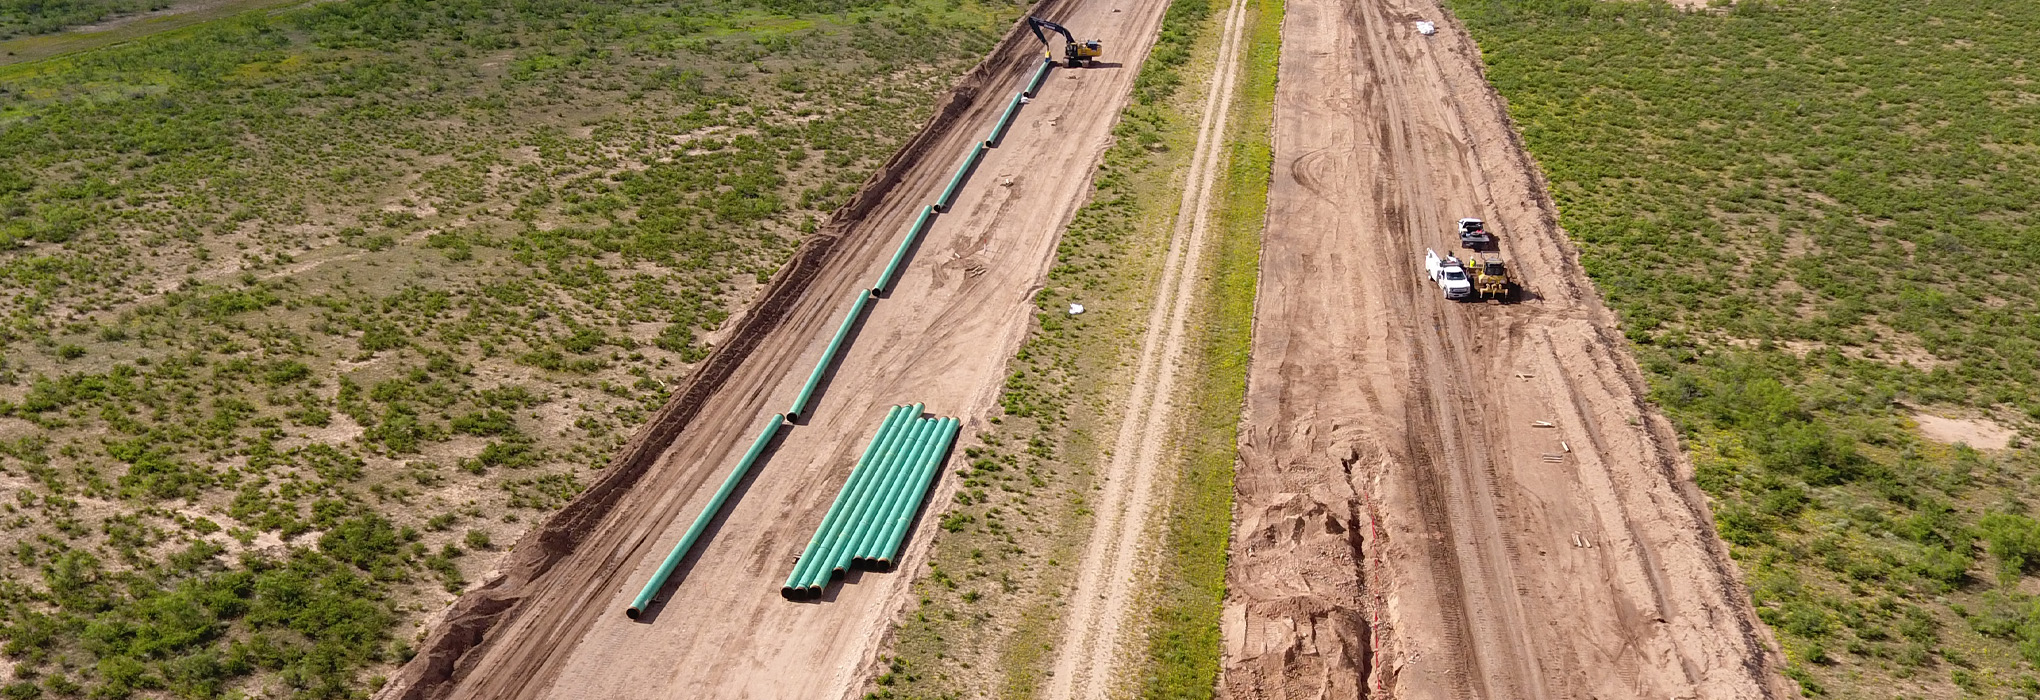 PALO Pipeline Survey and Permitting | Projects | Audubon